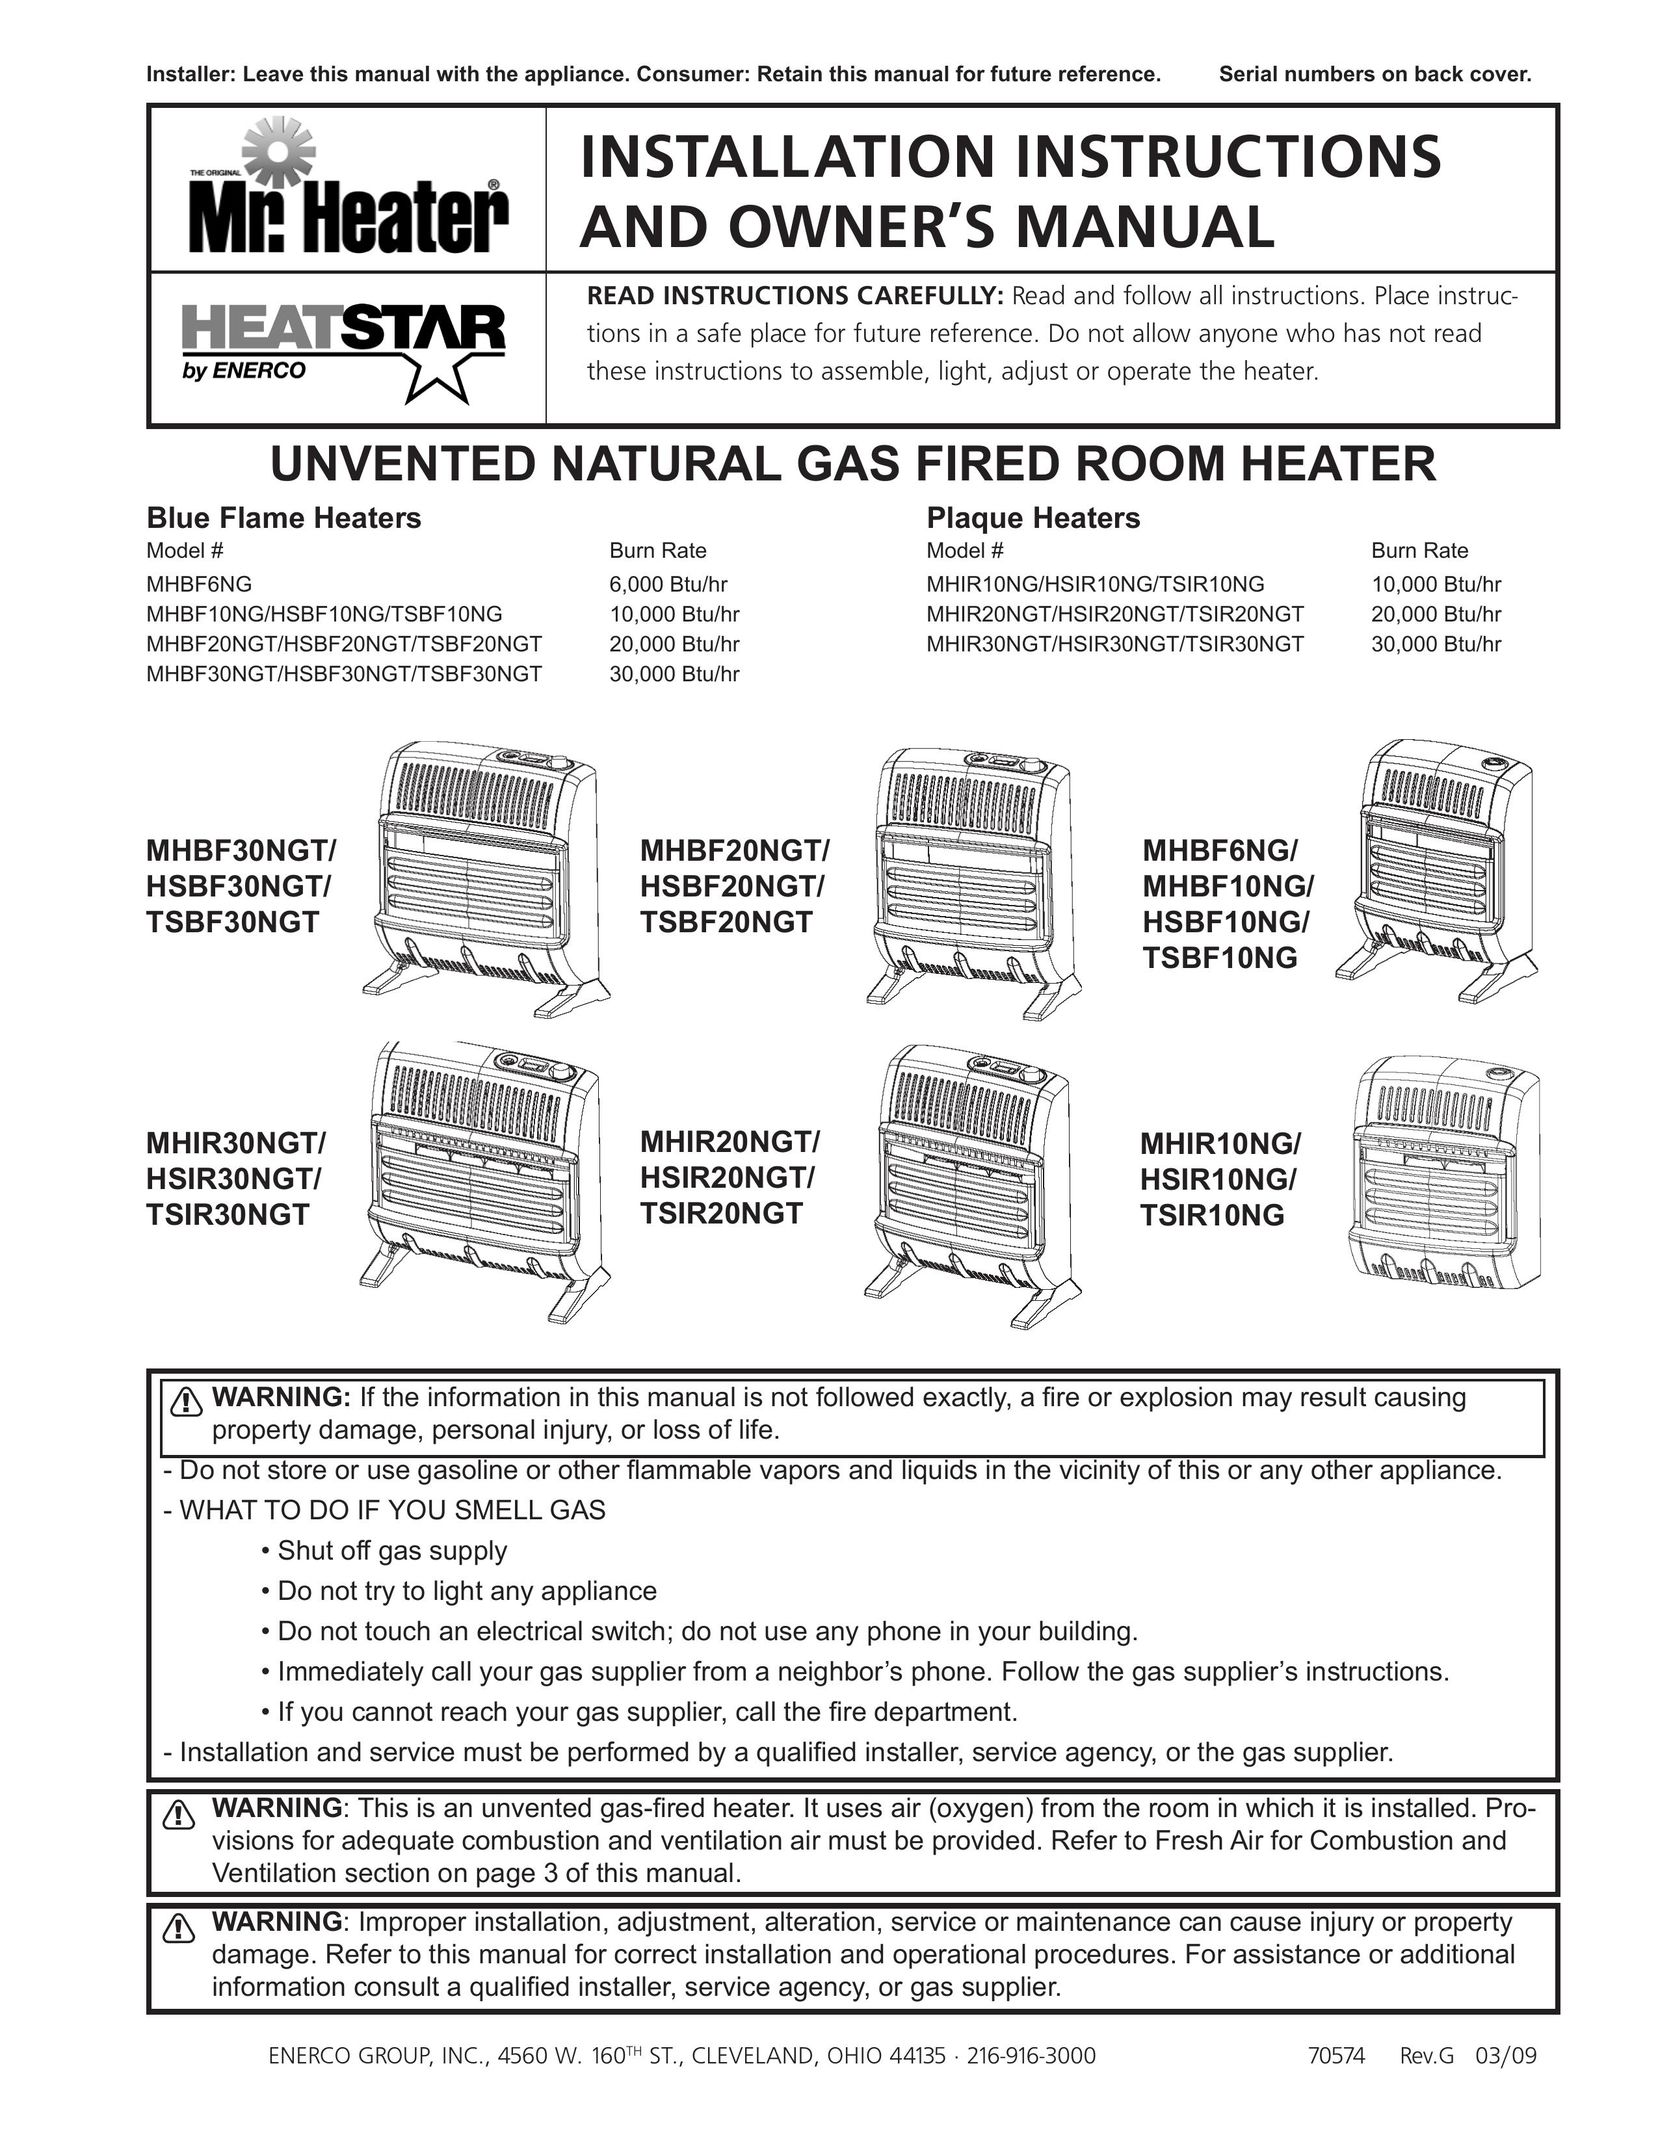 Enerco TSBF10NG Gas Heater User Manual